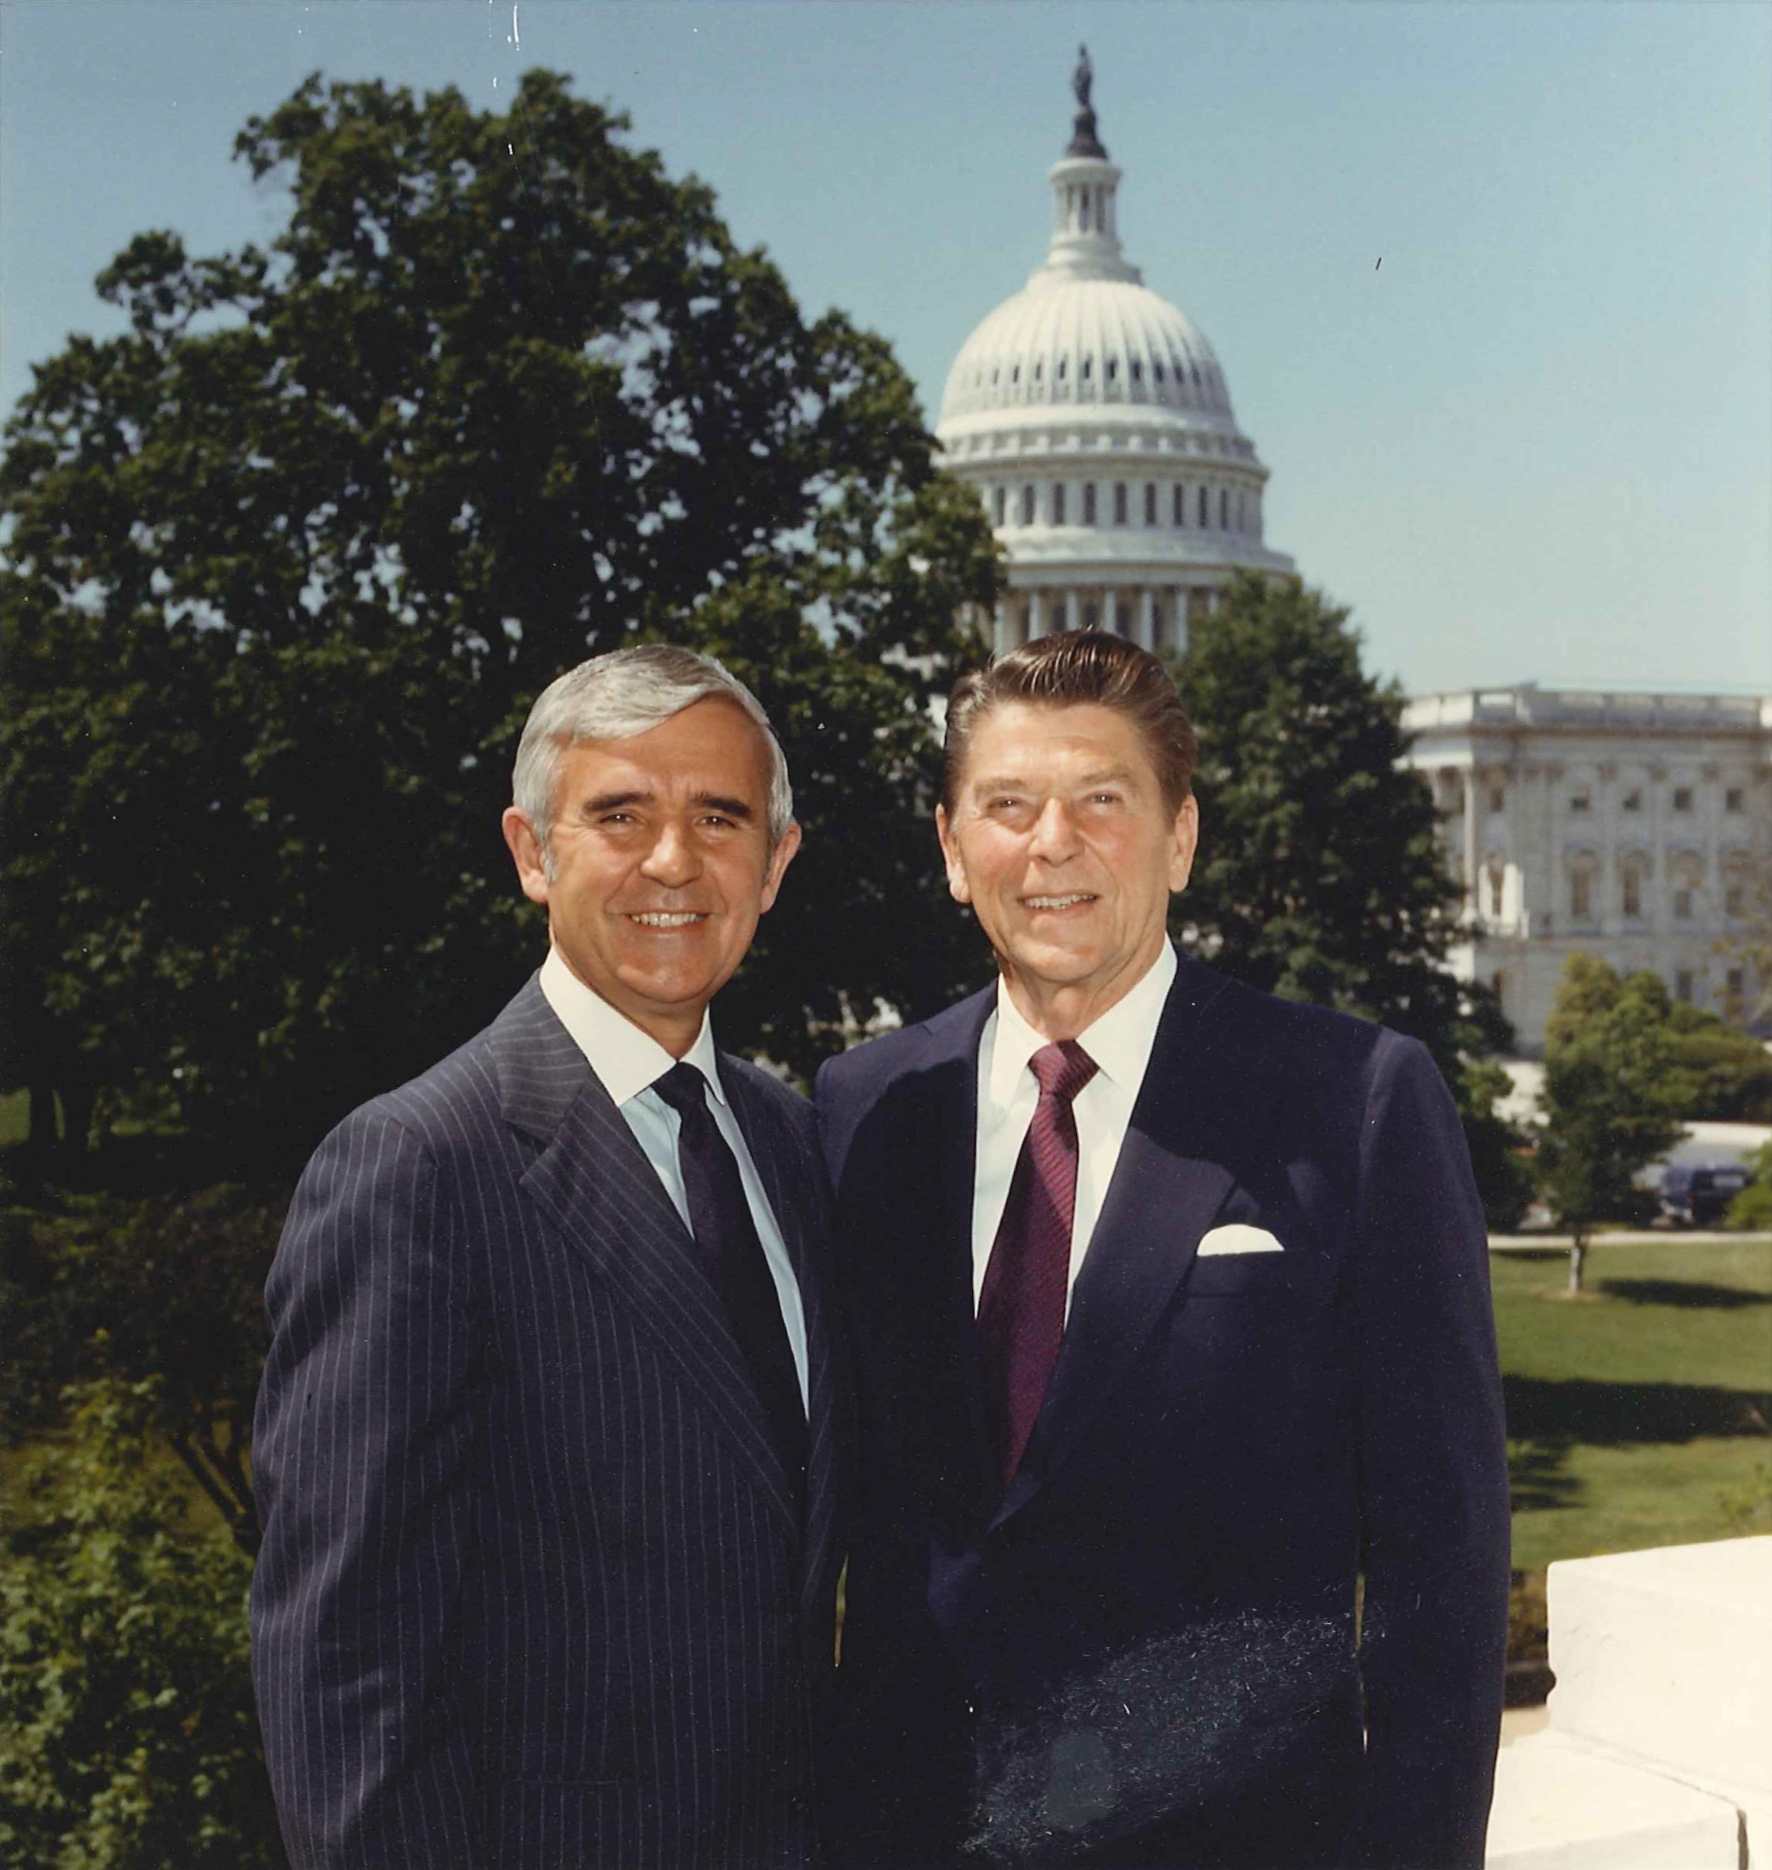 Ronald Reagan photo #88200, Ronald Reagan image